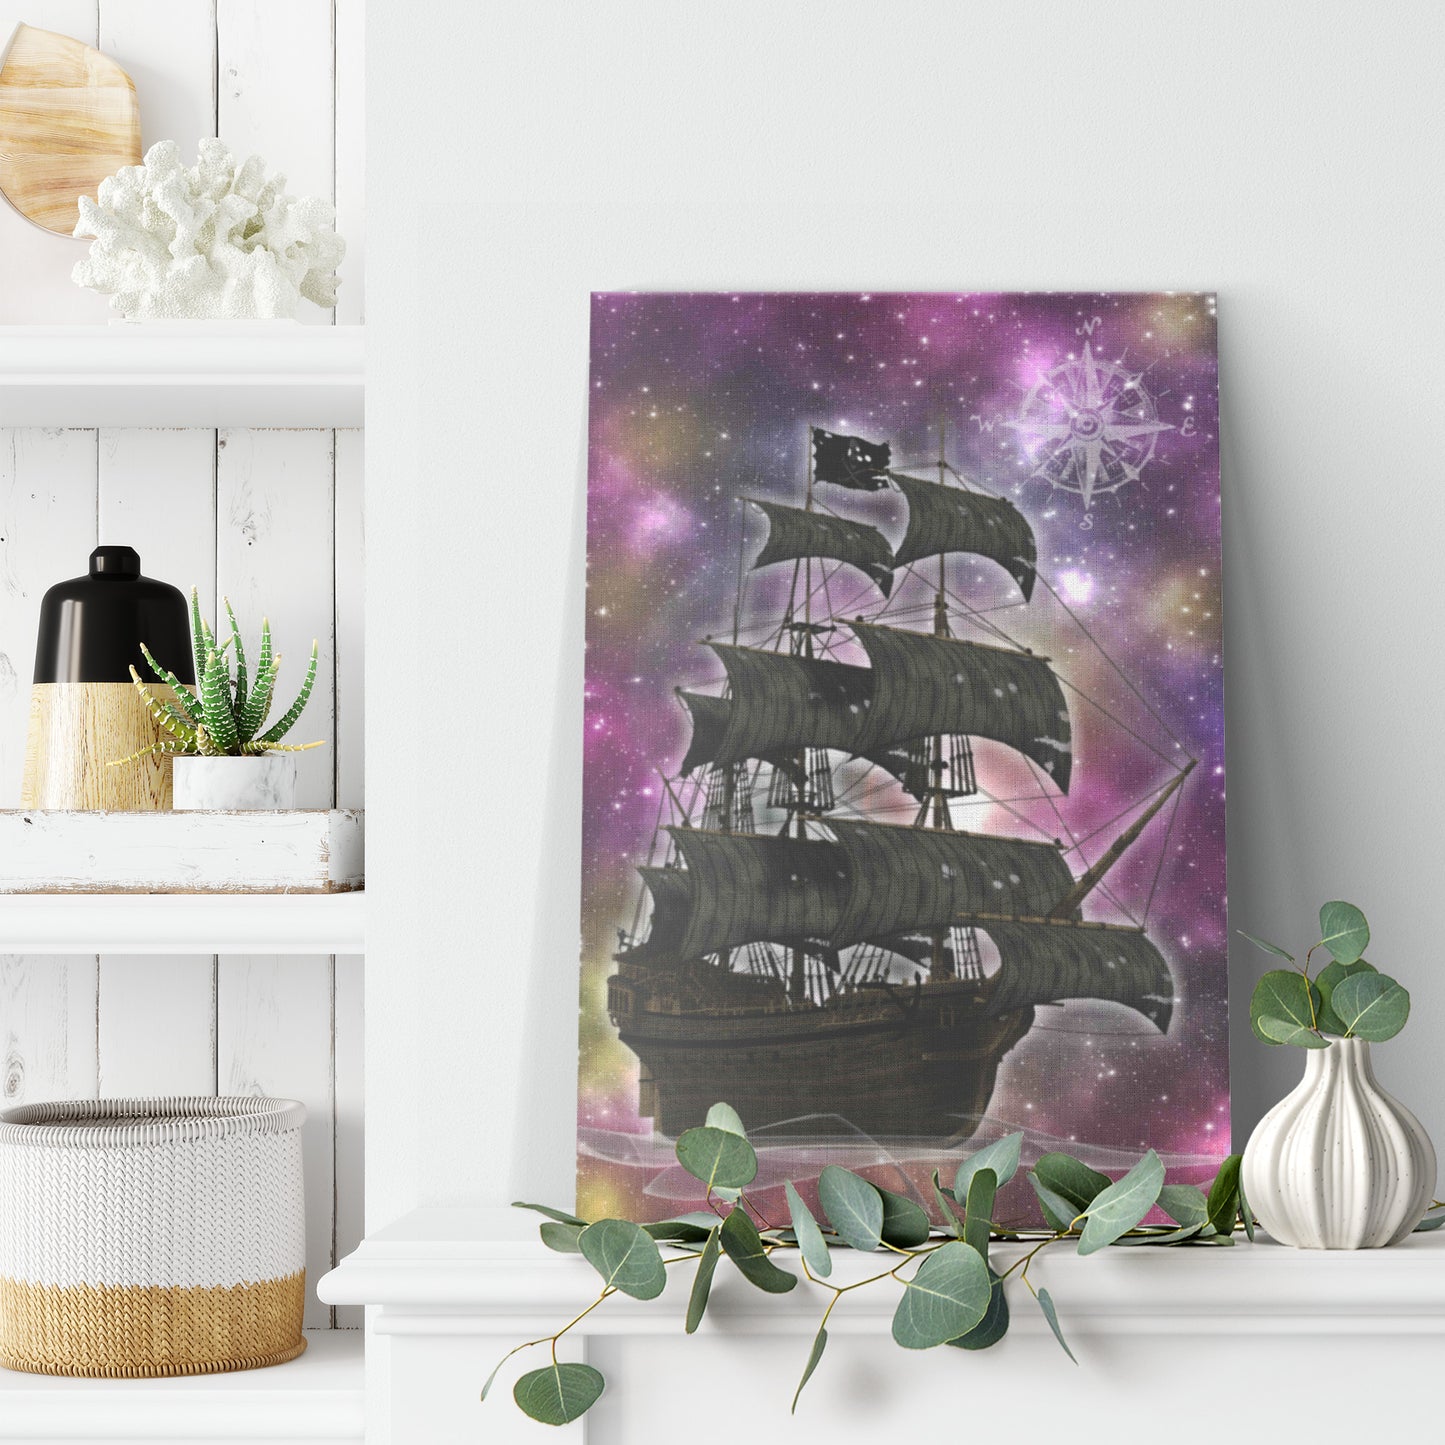 Pirate Ghost Ship Canvas Print - Purple-Yellow